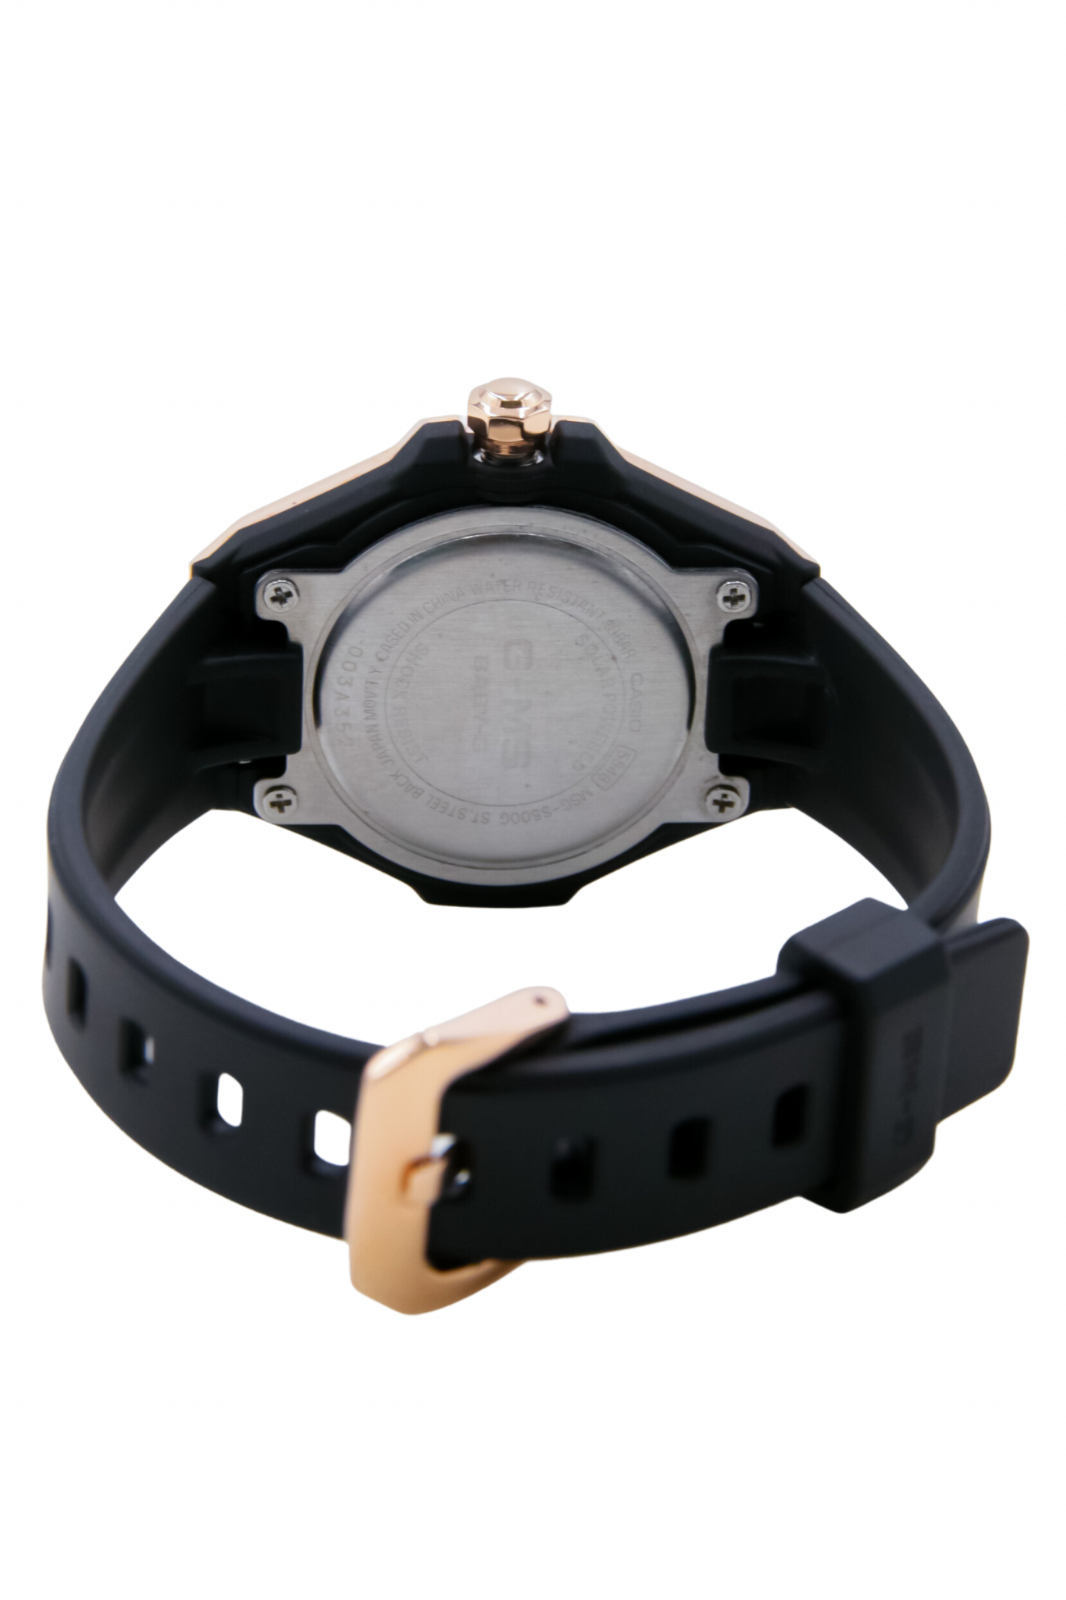 Casio G-Shock G-MS Black Resin Women's Watch MSGS500G-1A, 42mm  889232253374